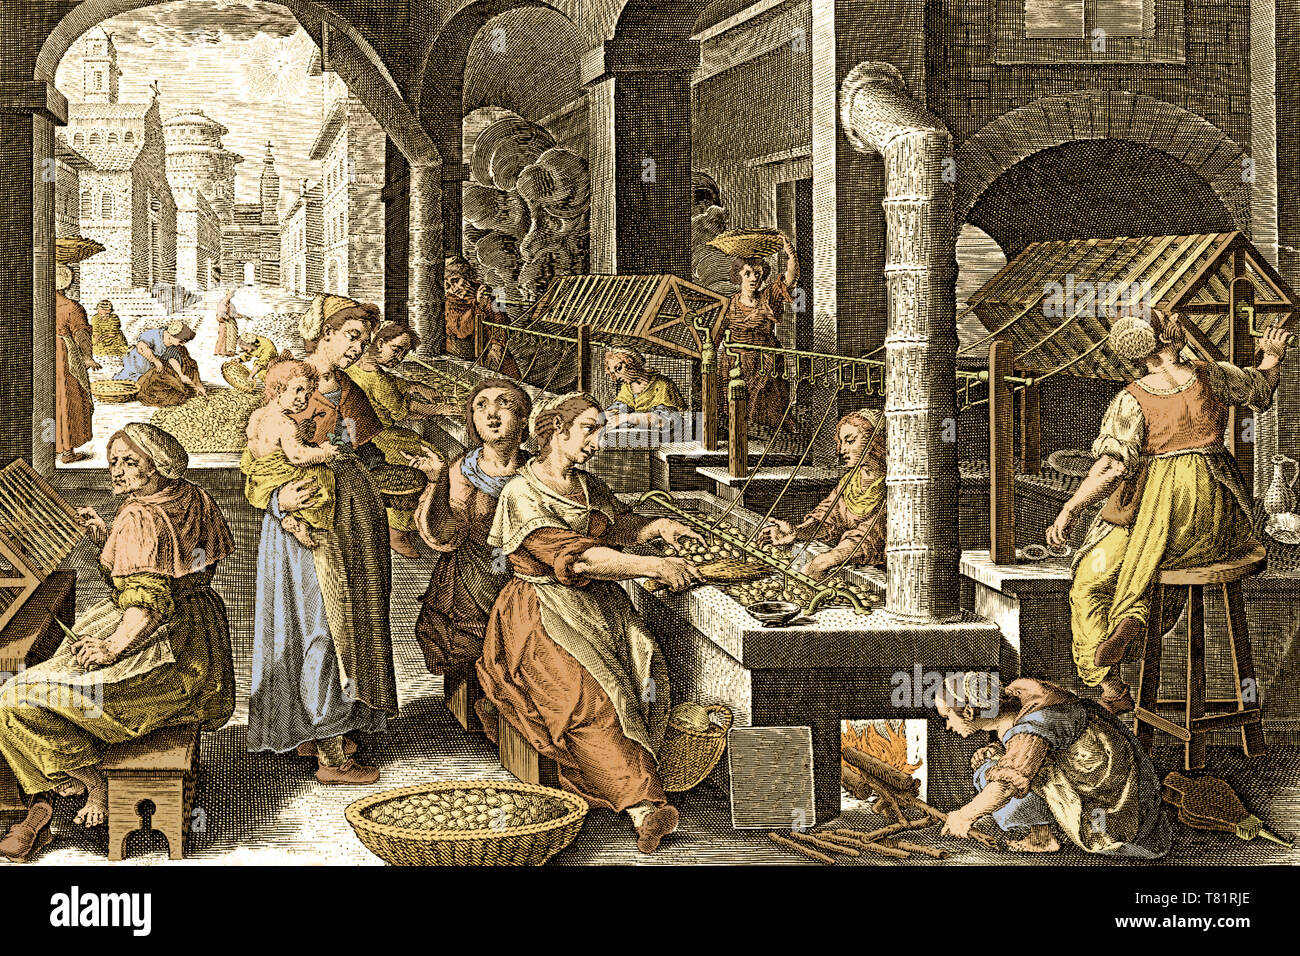 Weaving Room, Silk Making in Europe, 16th Century Stock Photo